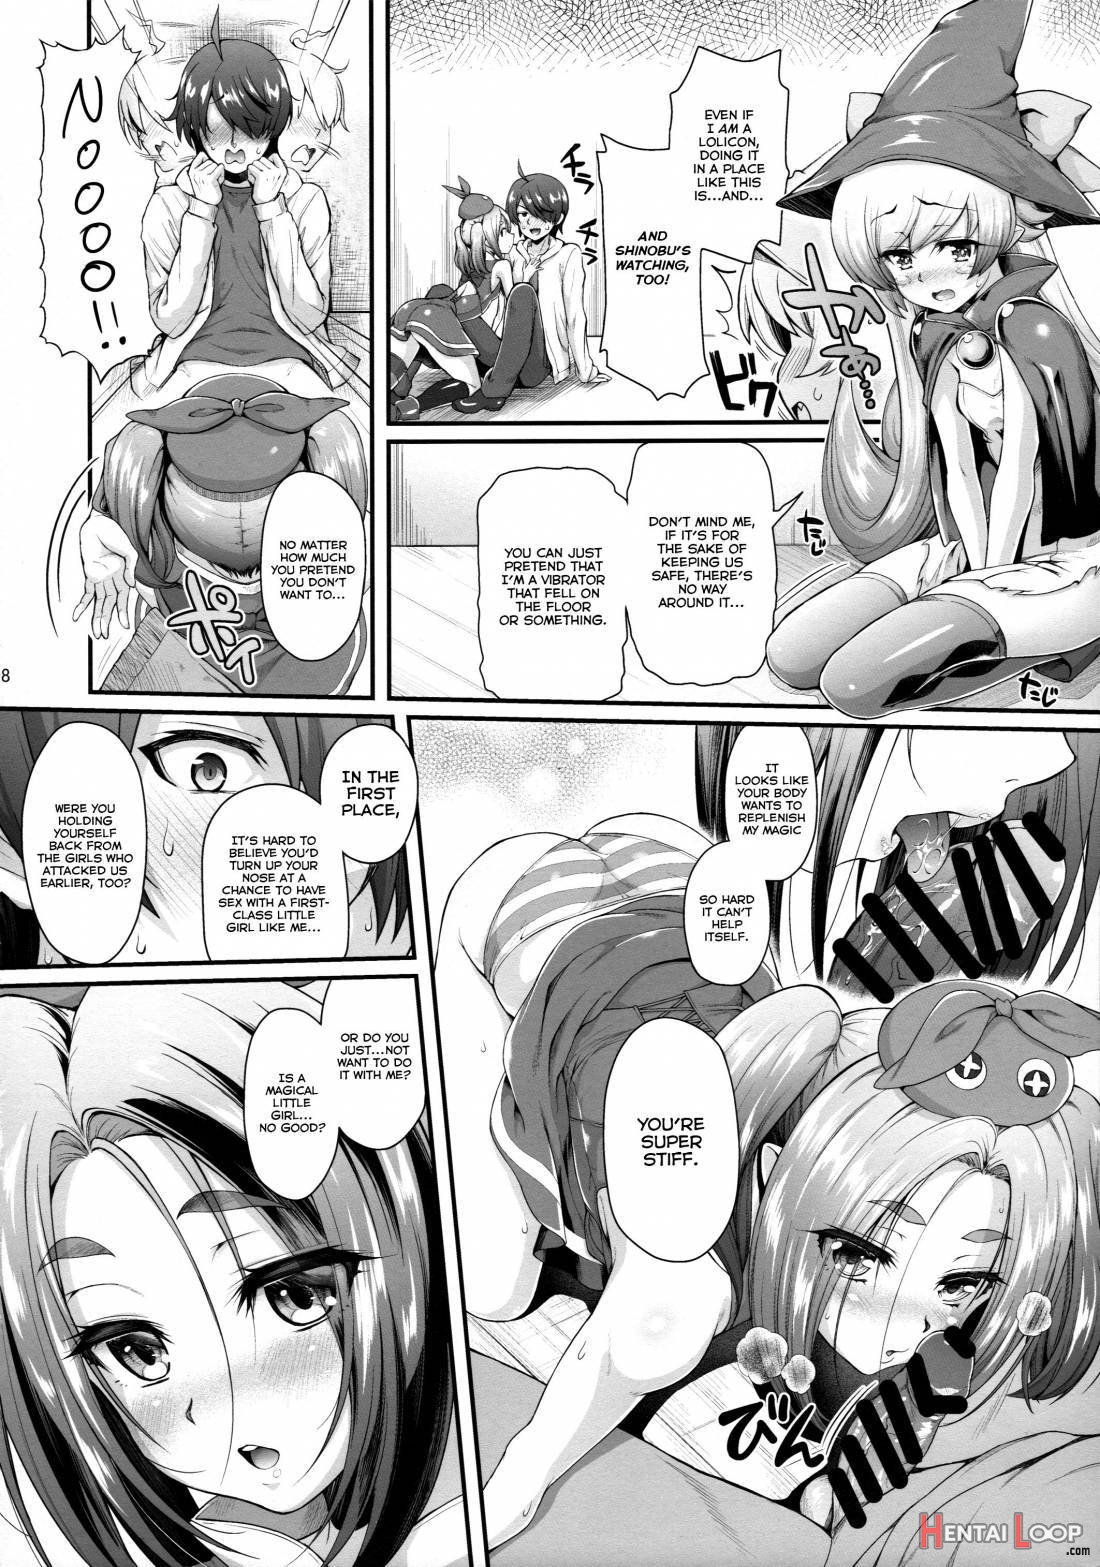 Pachimonogatari Part 11: Yotsugi Magika page 8